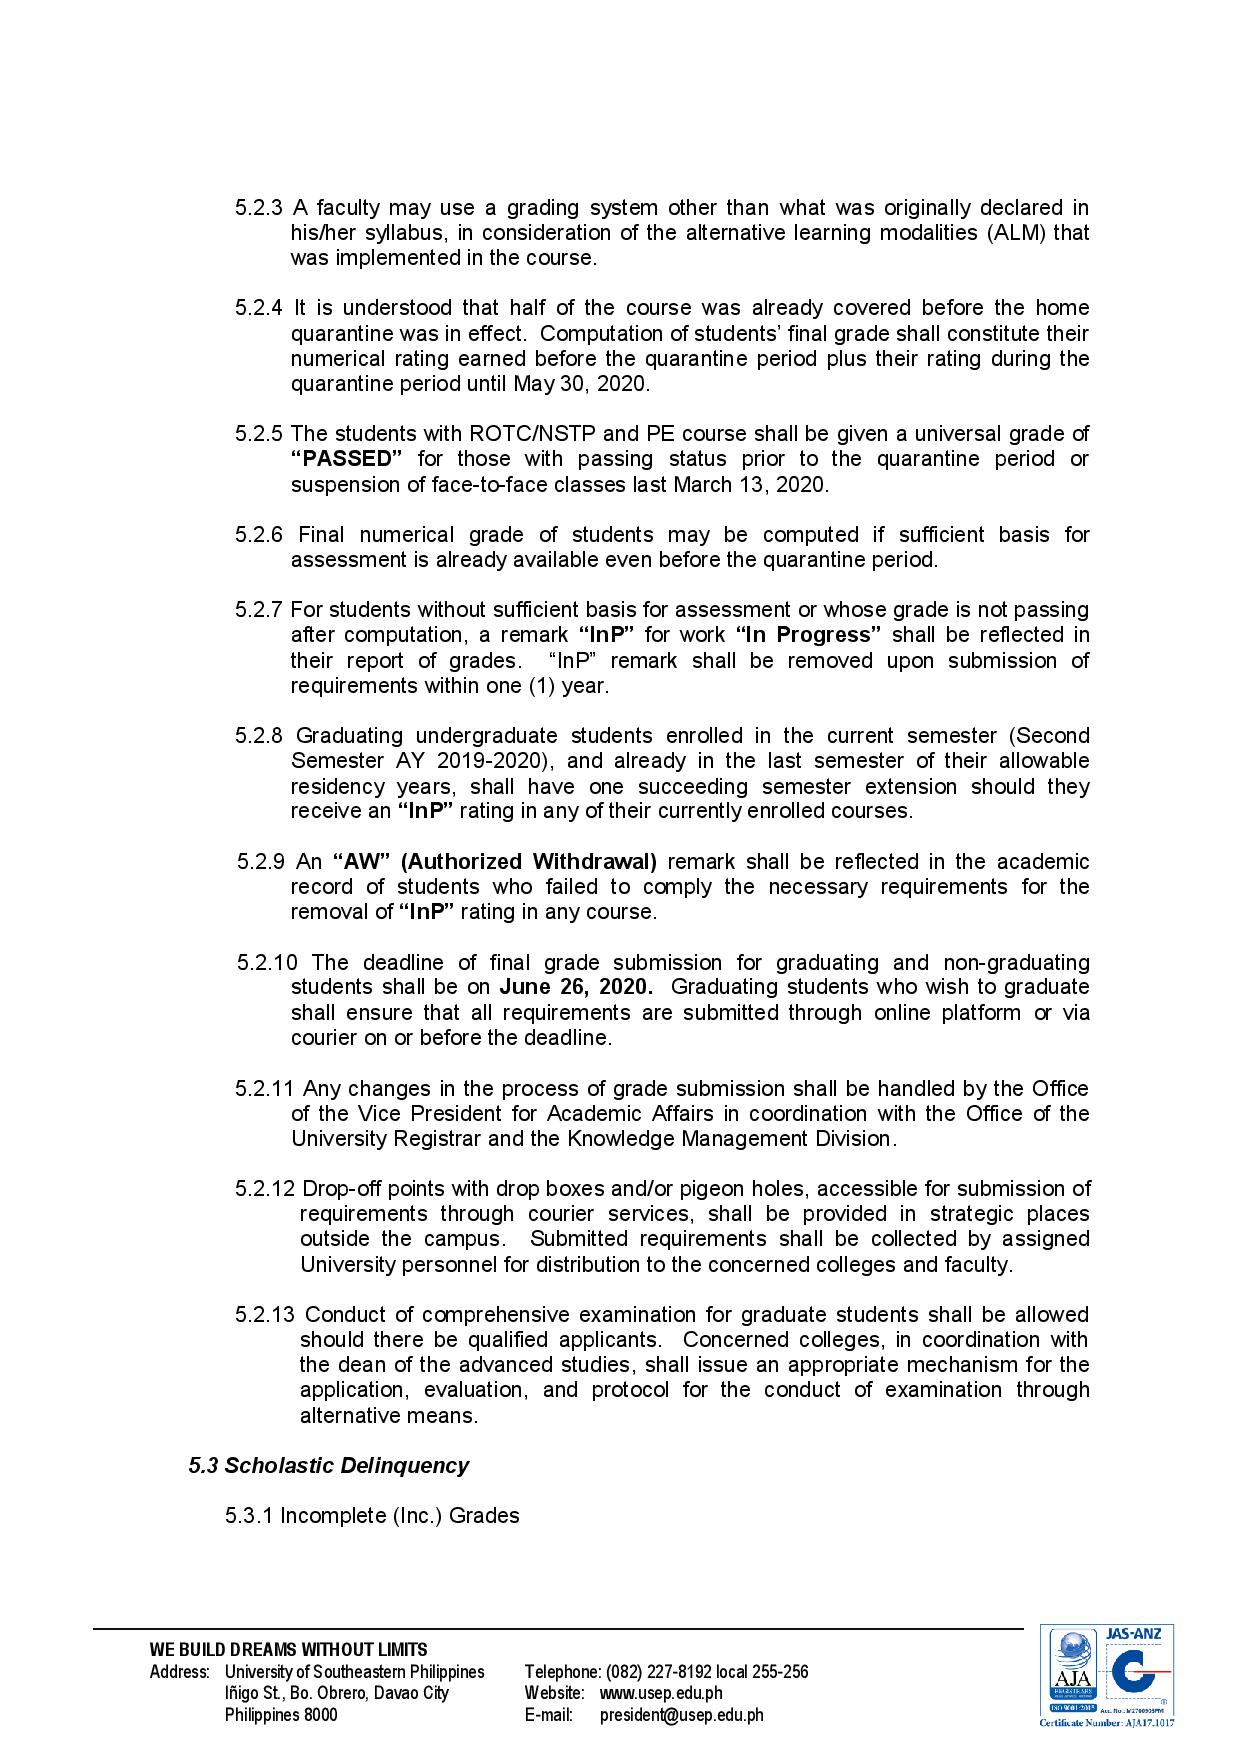 mc-02-s-2020-memorandum-circular-on-usep-academic-regulations-amidst-the-covid-19-pandemic-page-003